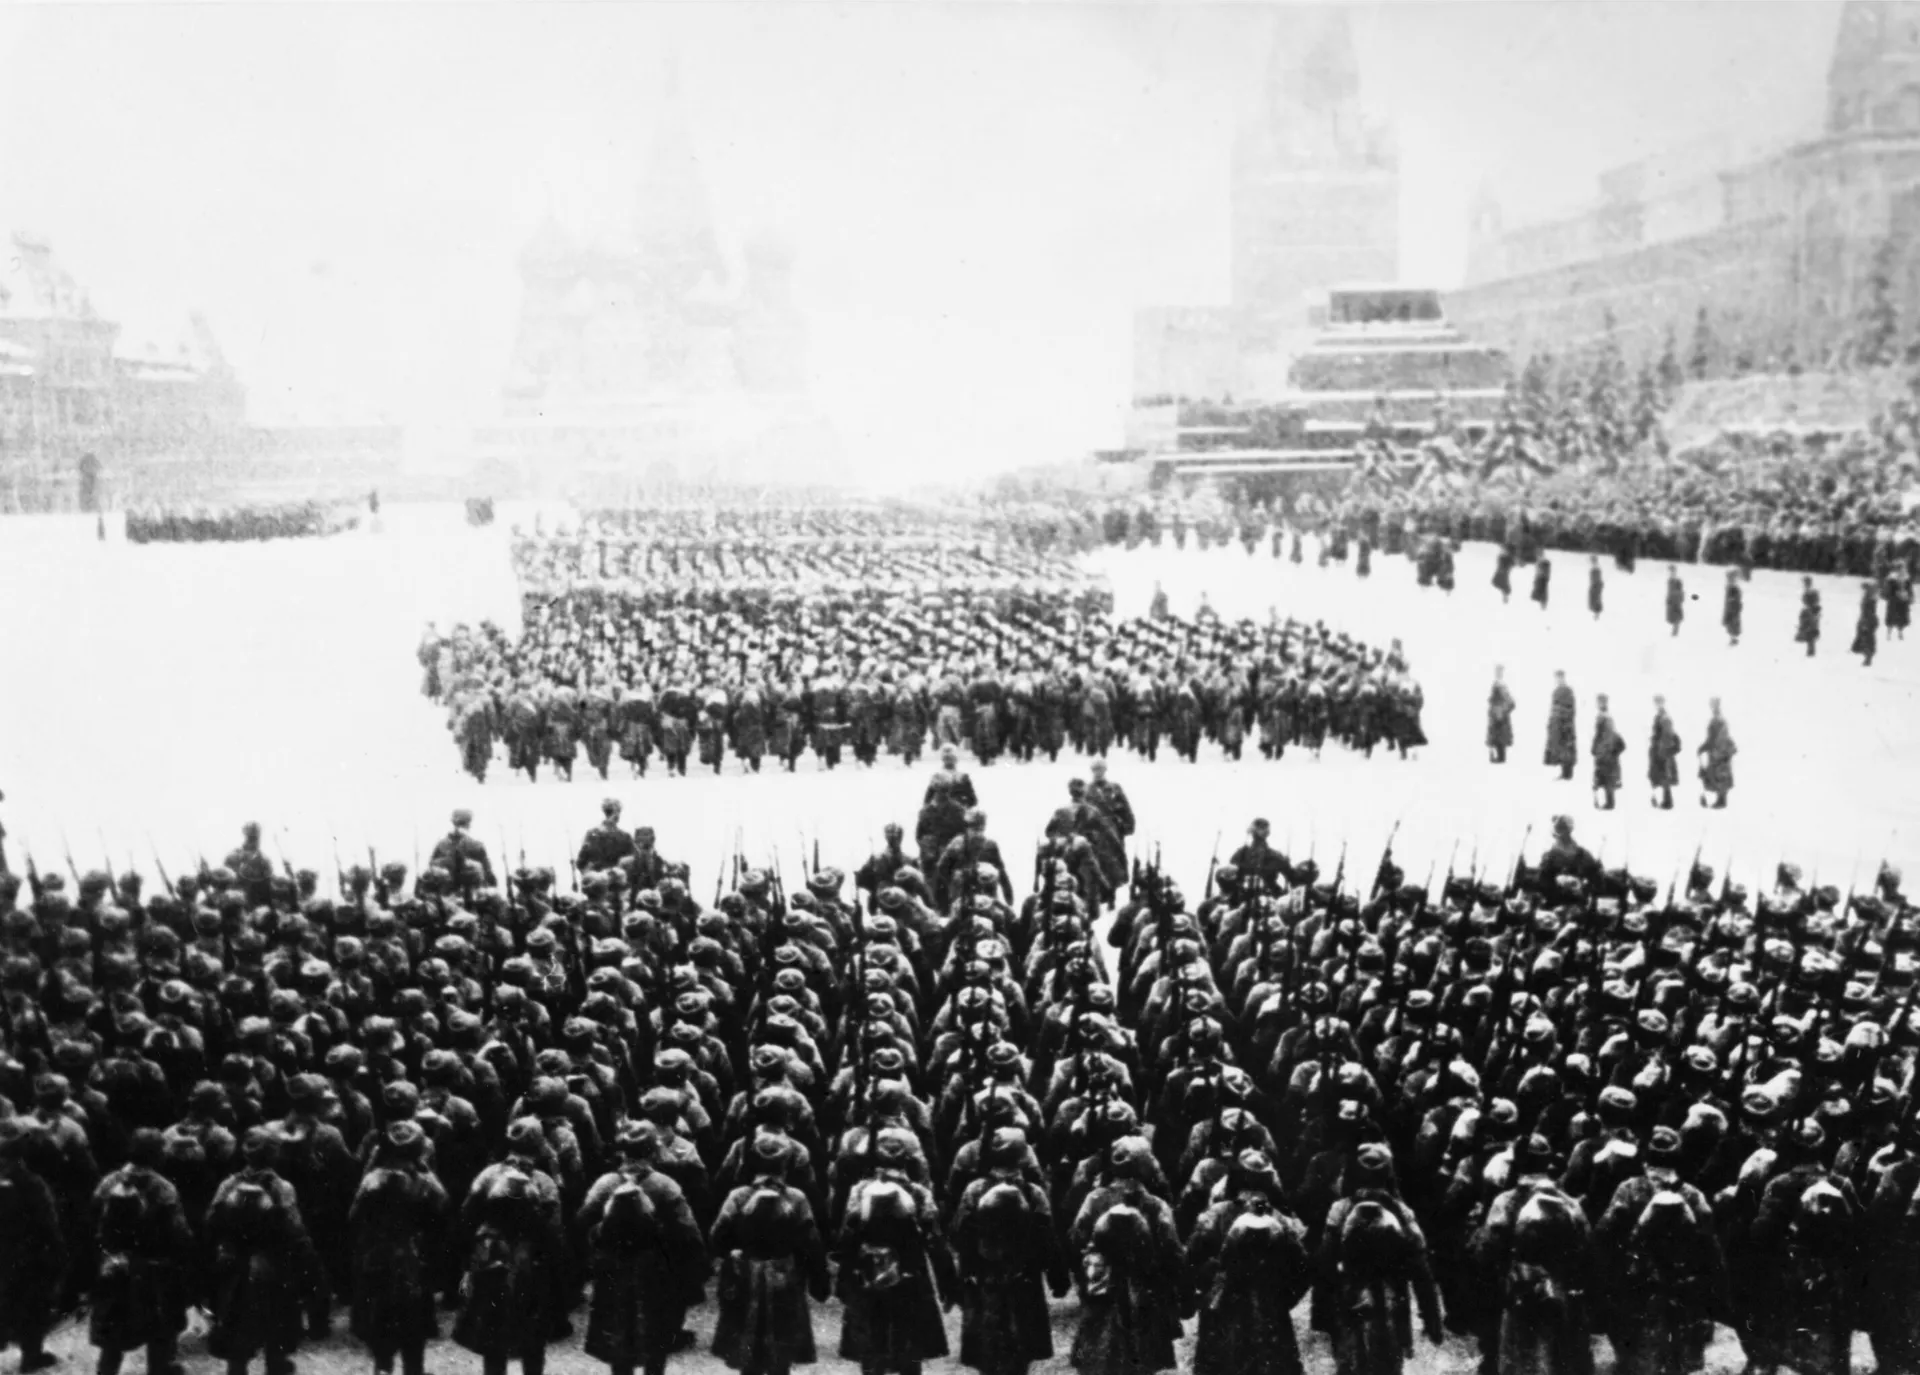 Парад на красной площади 7 ноября 1941. Битва за Москву. Битва под Москвой 1941-1942. Битва за Москву 1941 год узкая картинка.